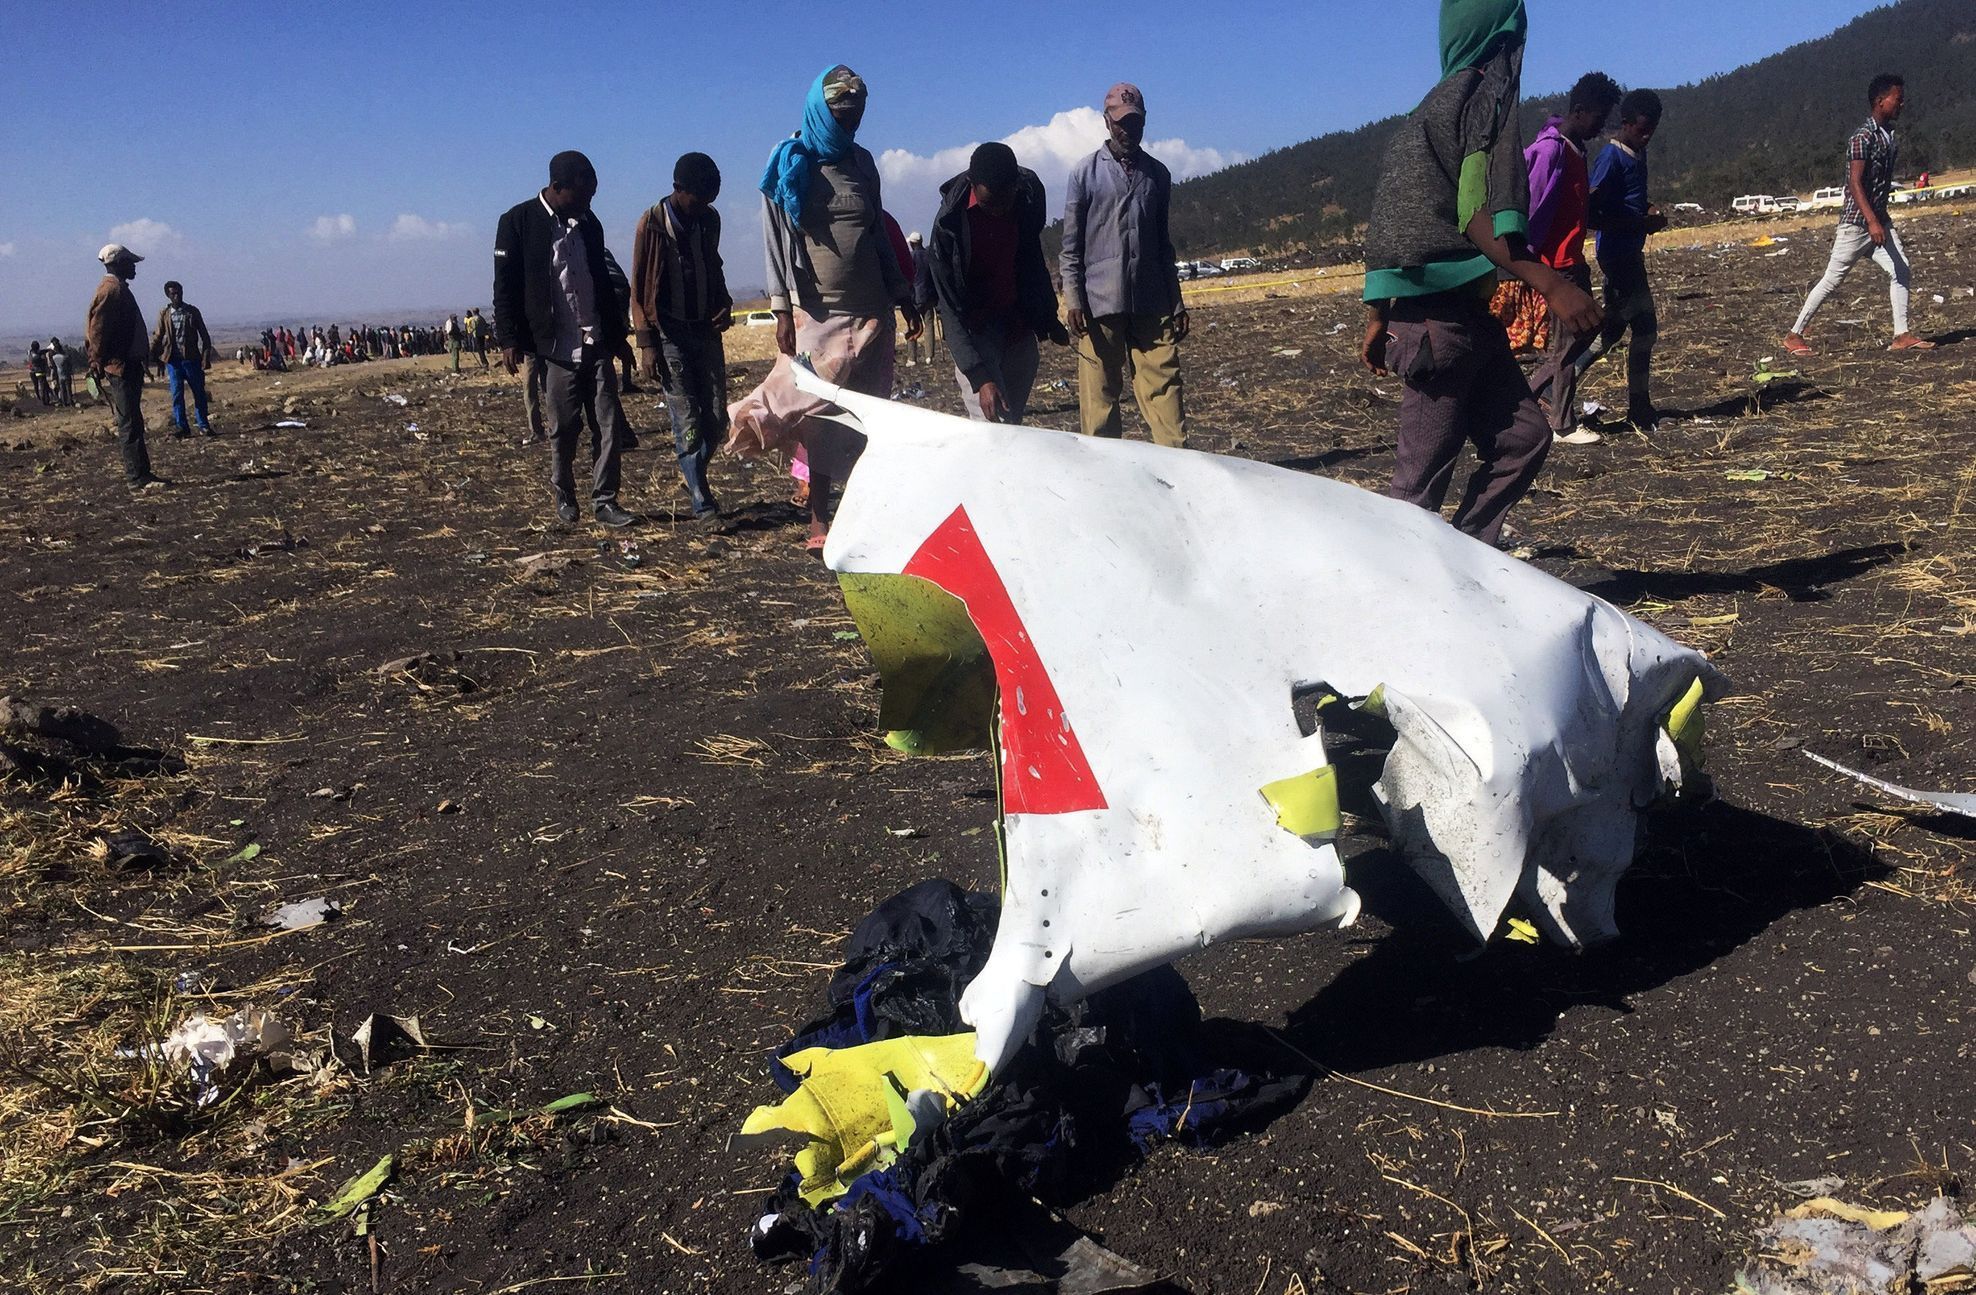 Pád letadla etiopských aerolinií